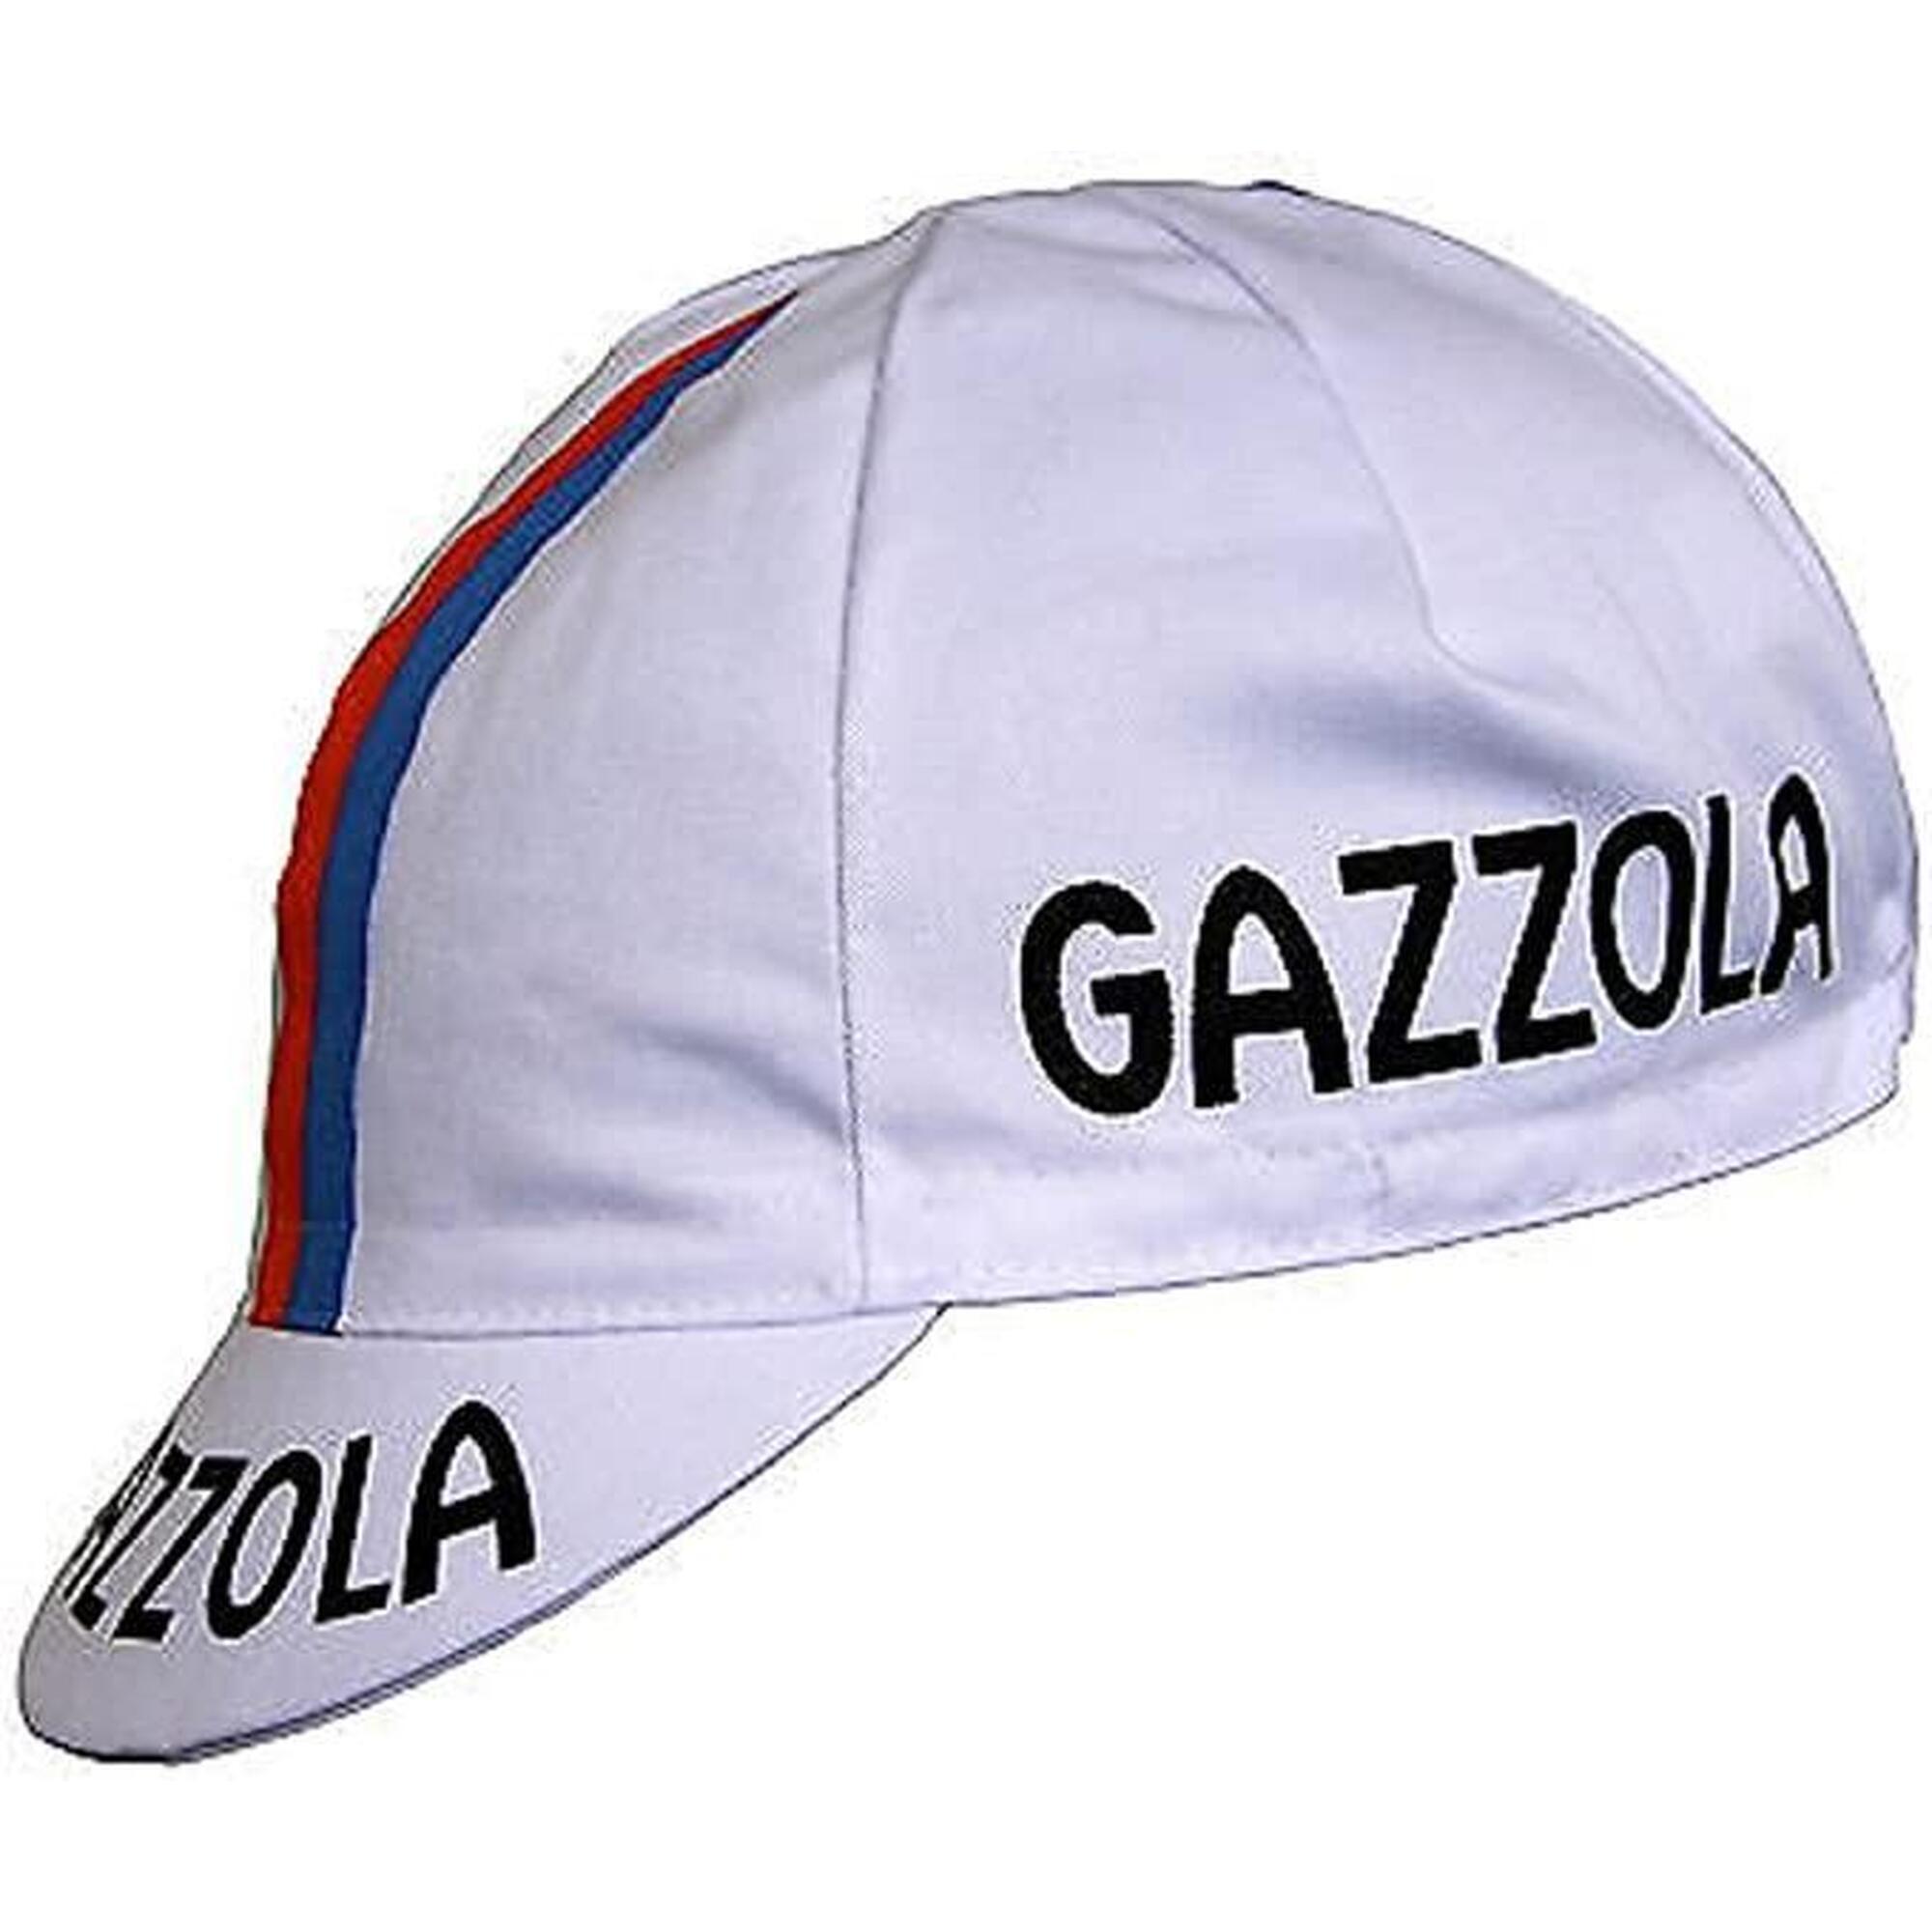 APIS Gazzola Team Cycling Cap Retro Racing Vintage Fixie